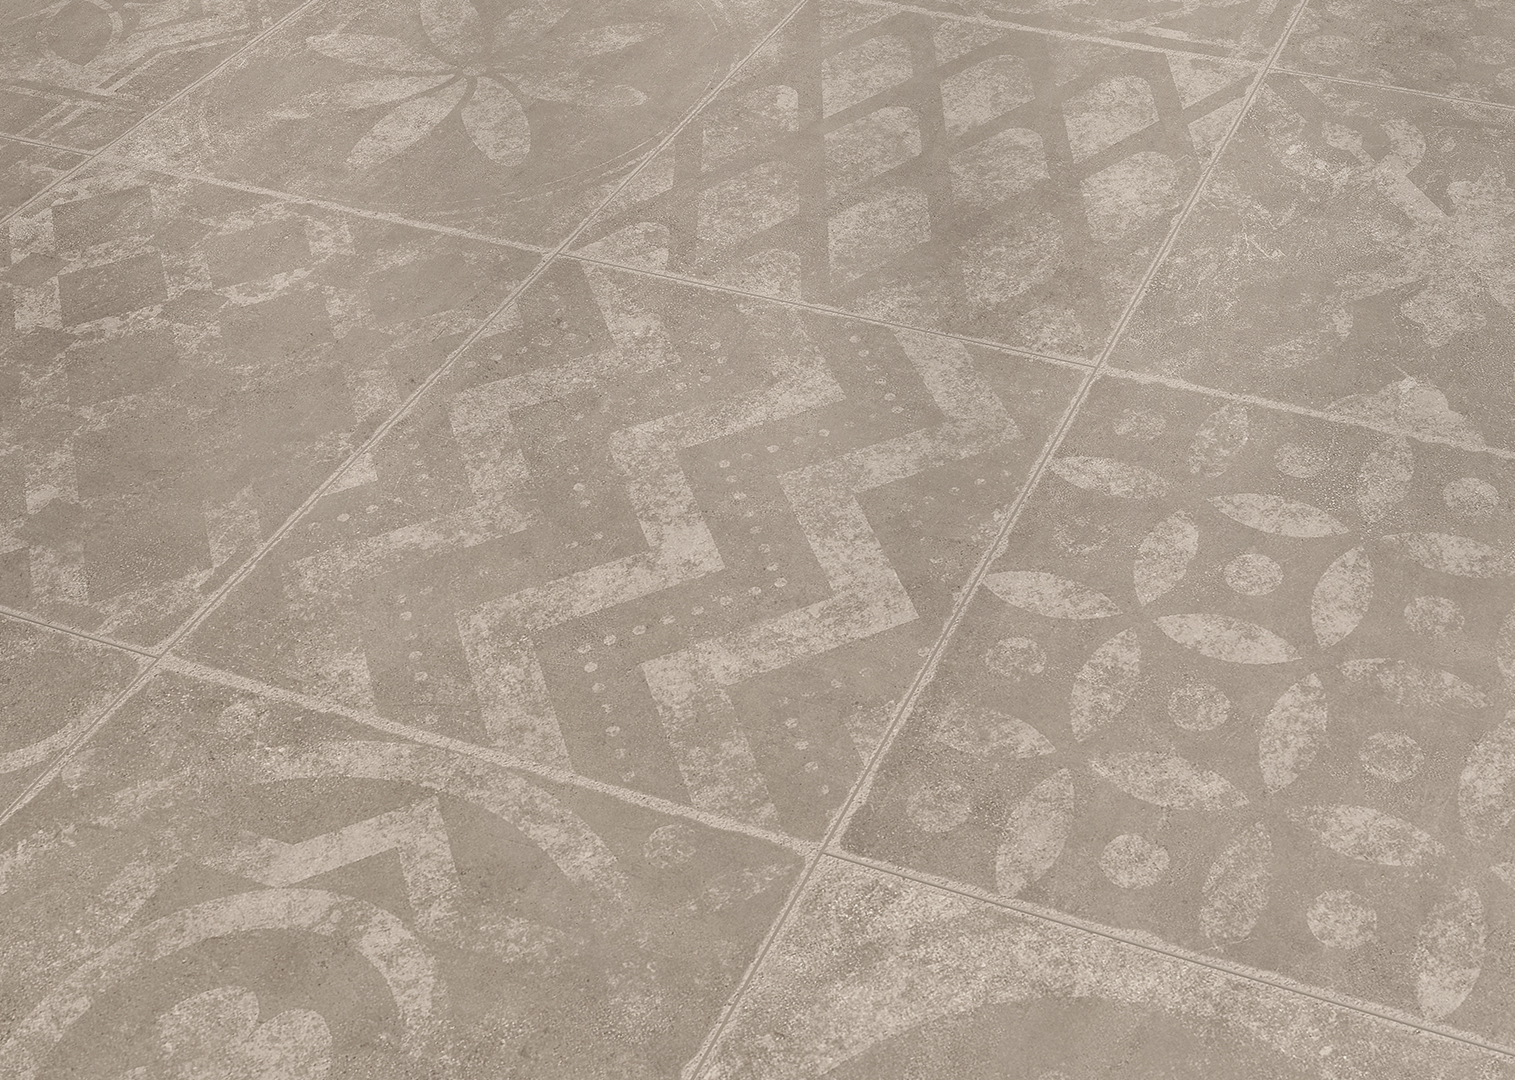 Universe Tiles Ontario design floor